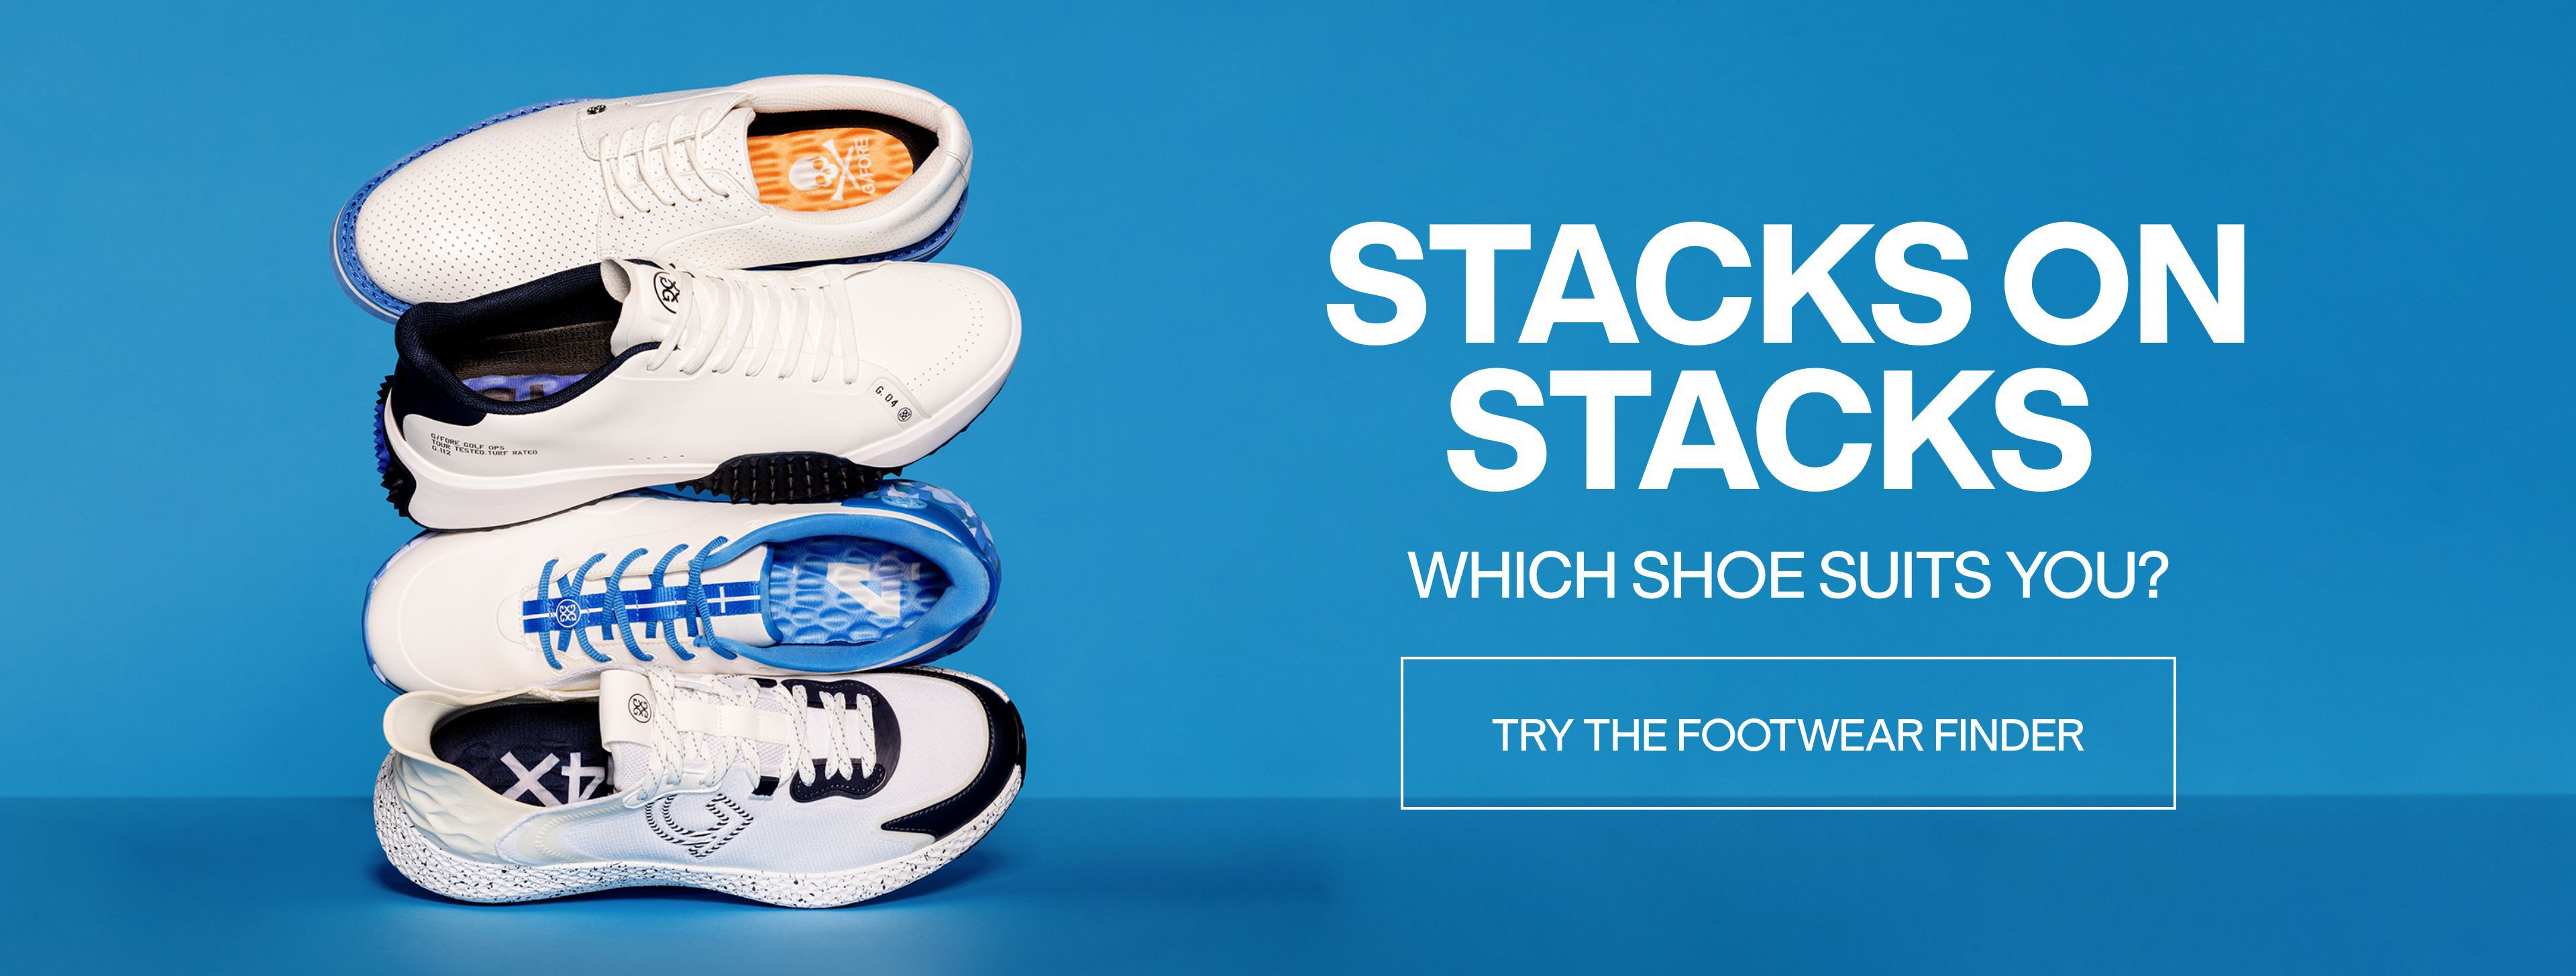 Try the Footwear Finder Quiz